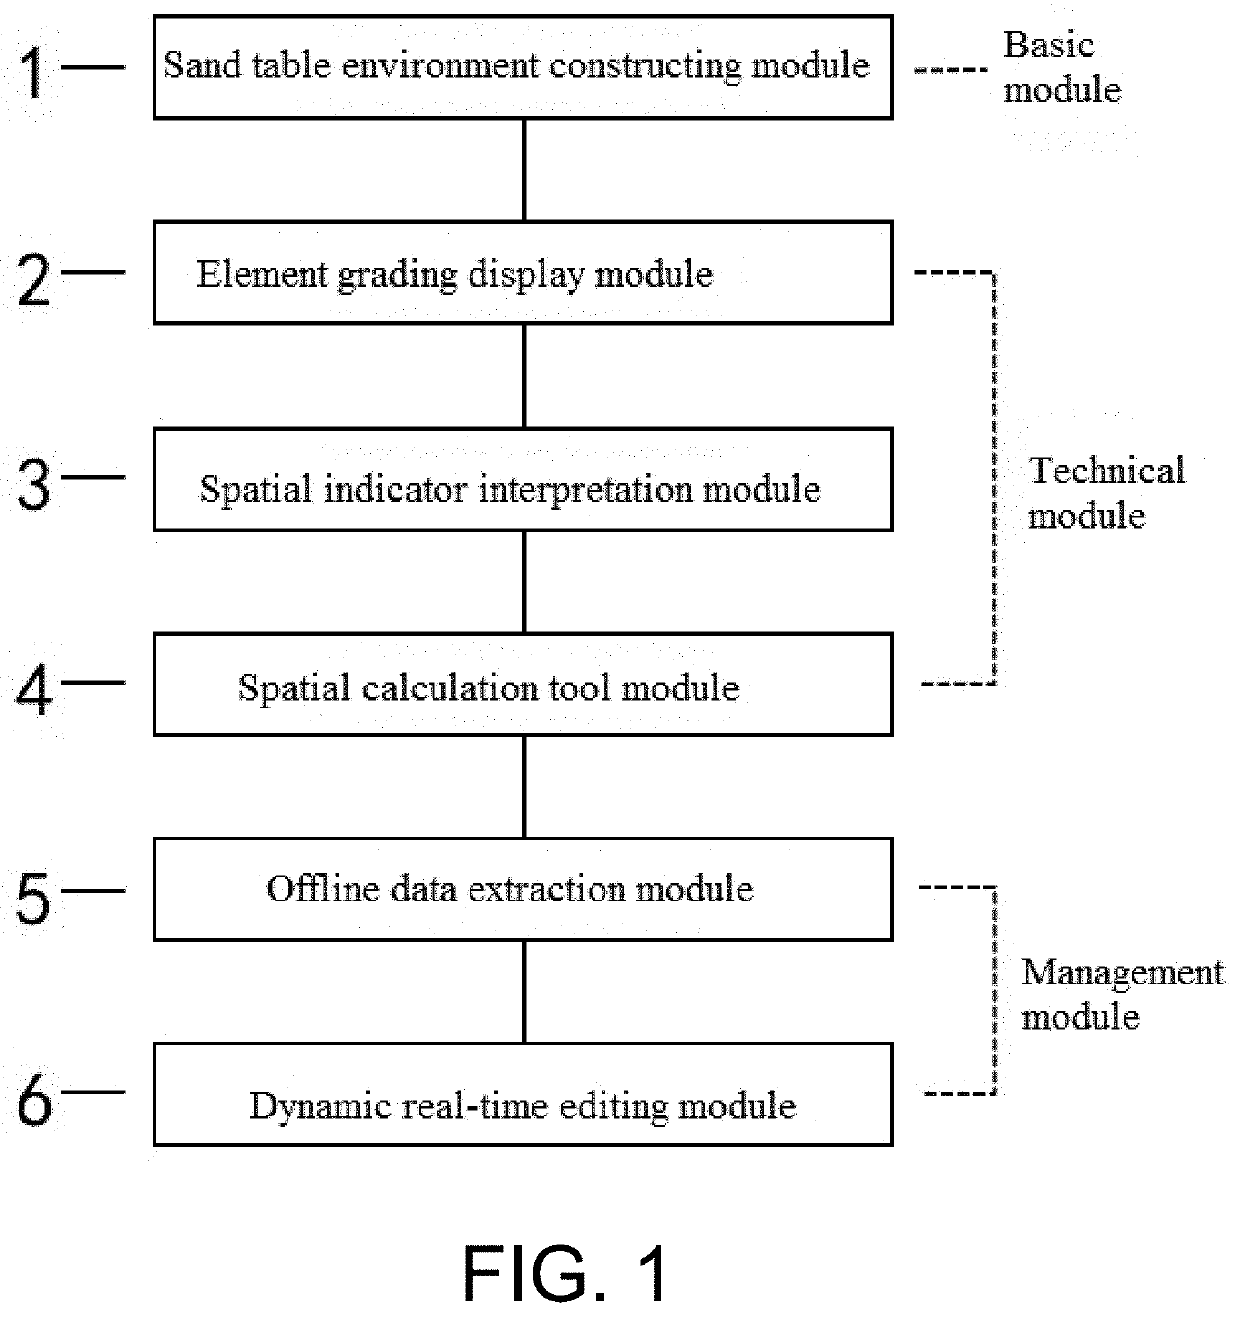 System for constructing urban design digital sand table